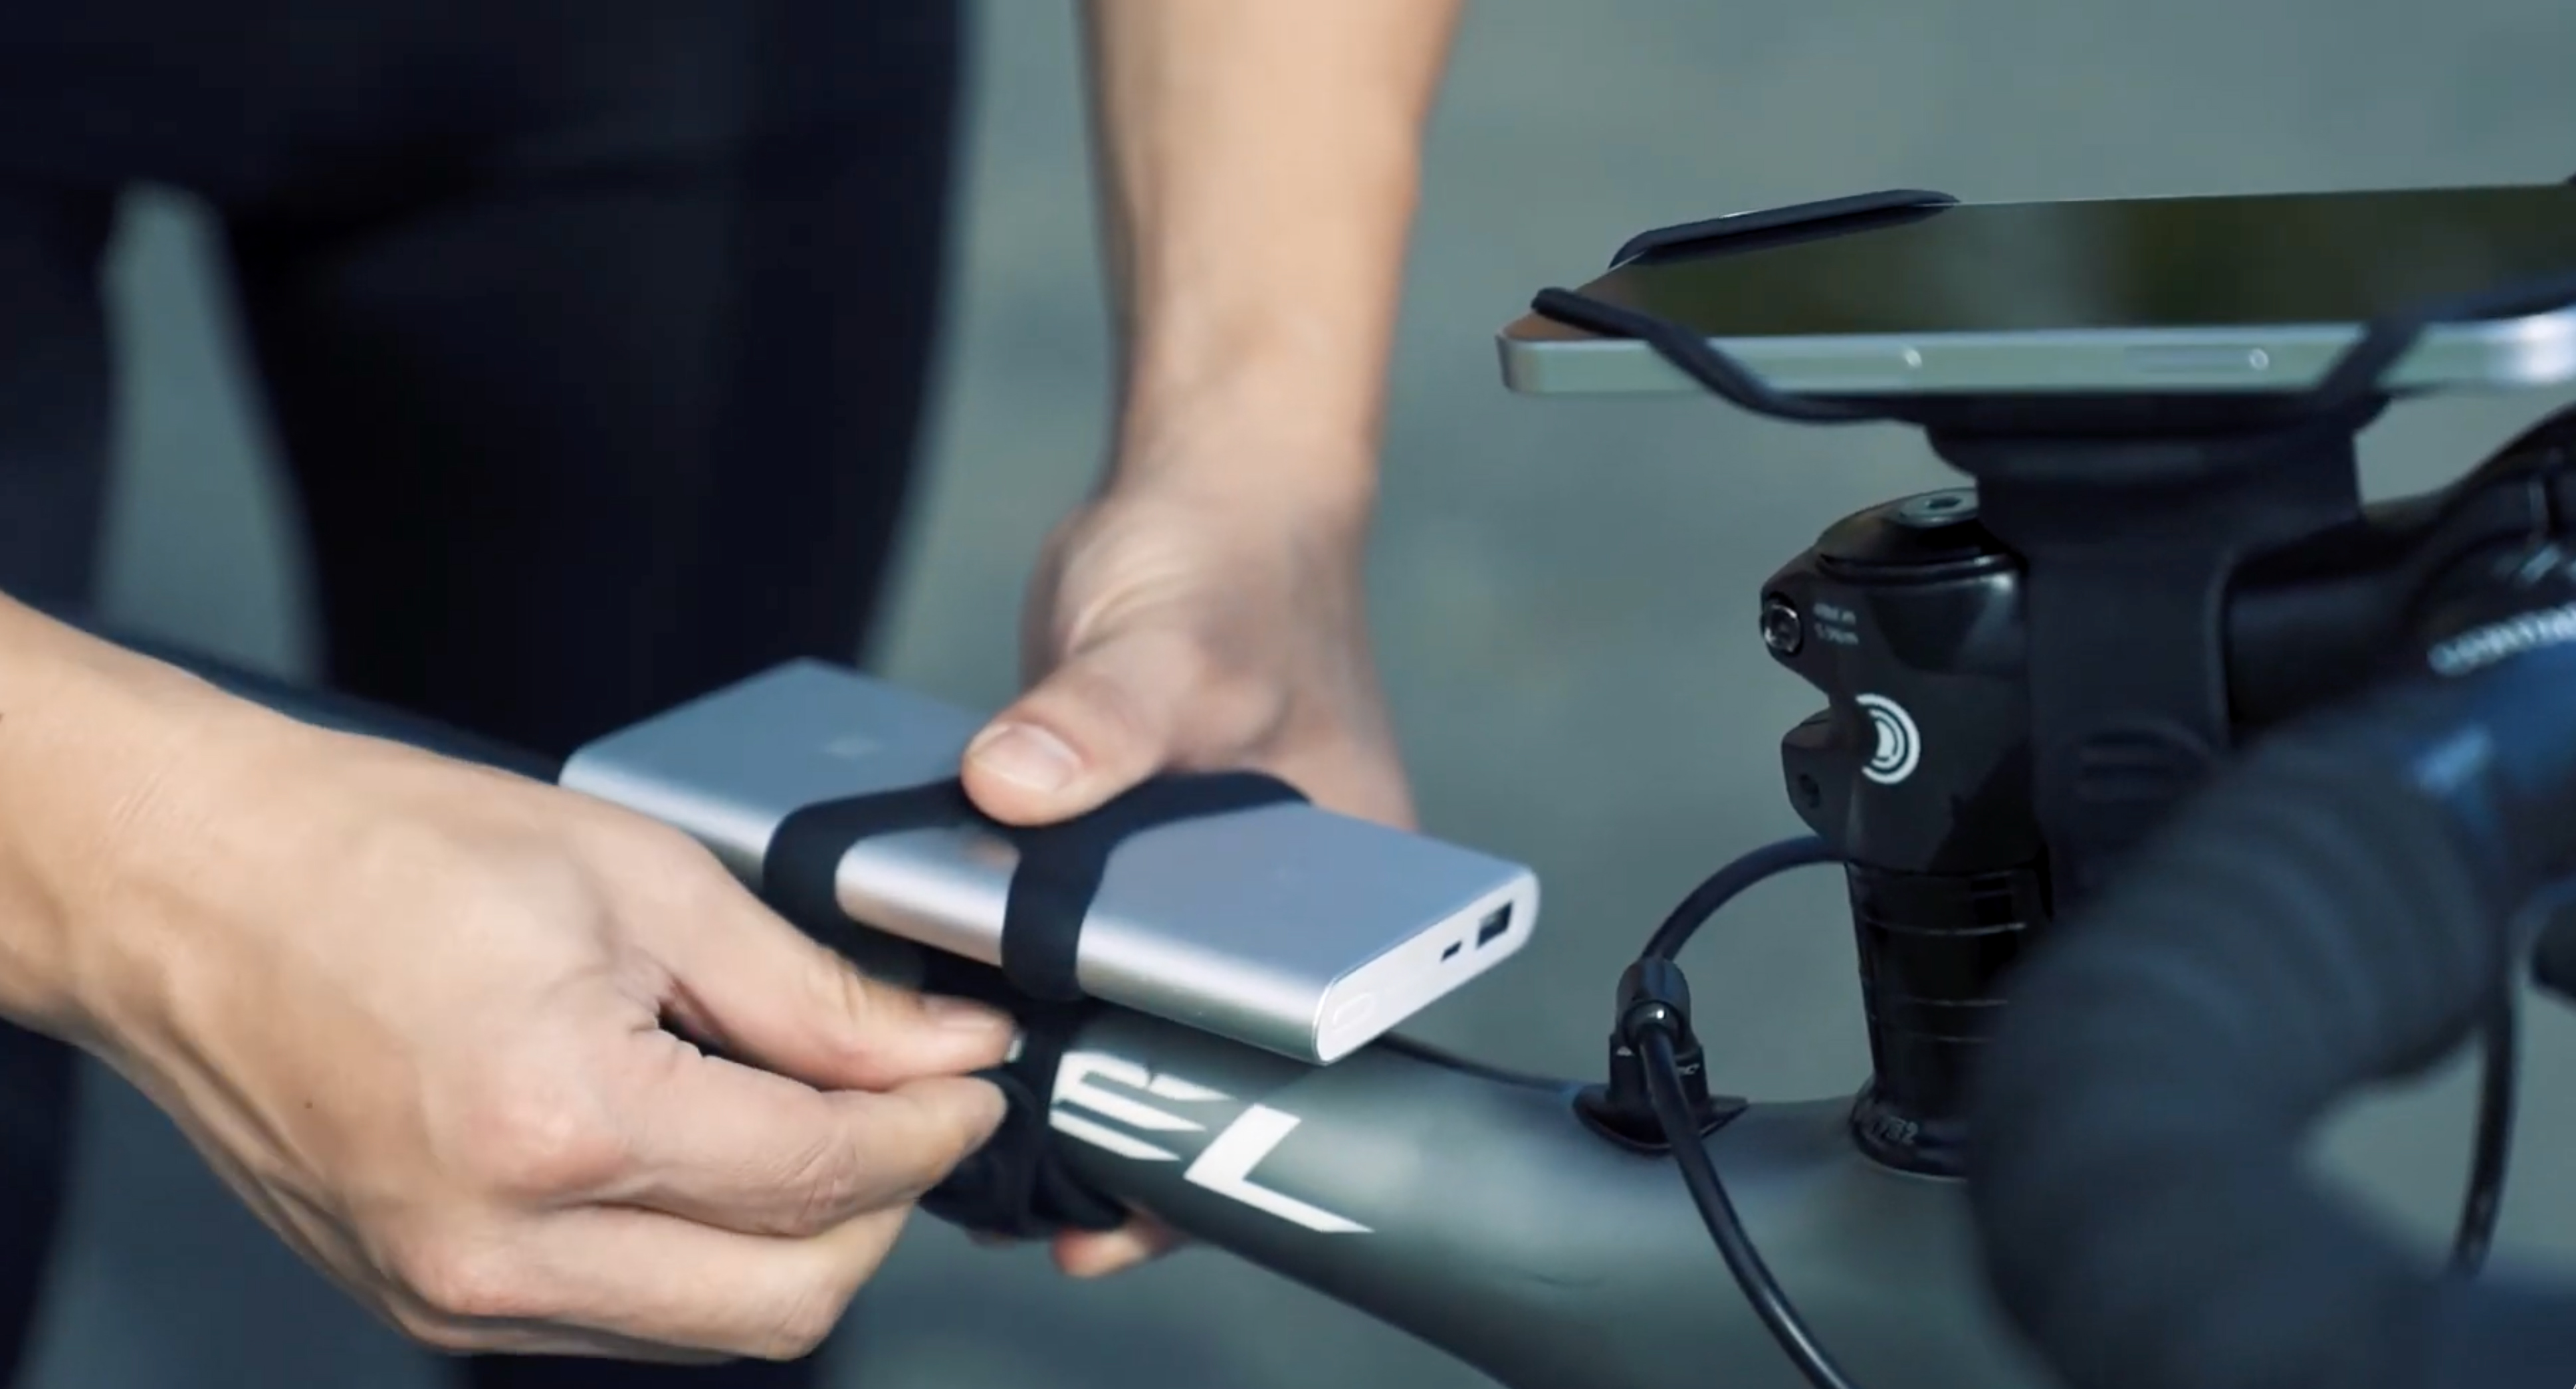 Bike Phone Charger - elastycznie